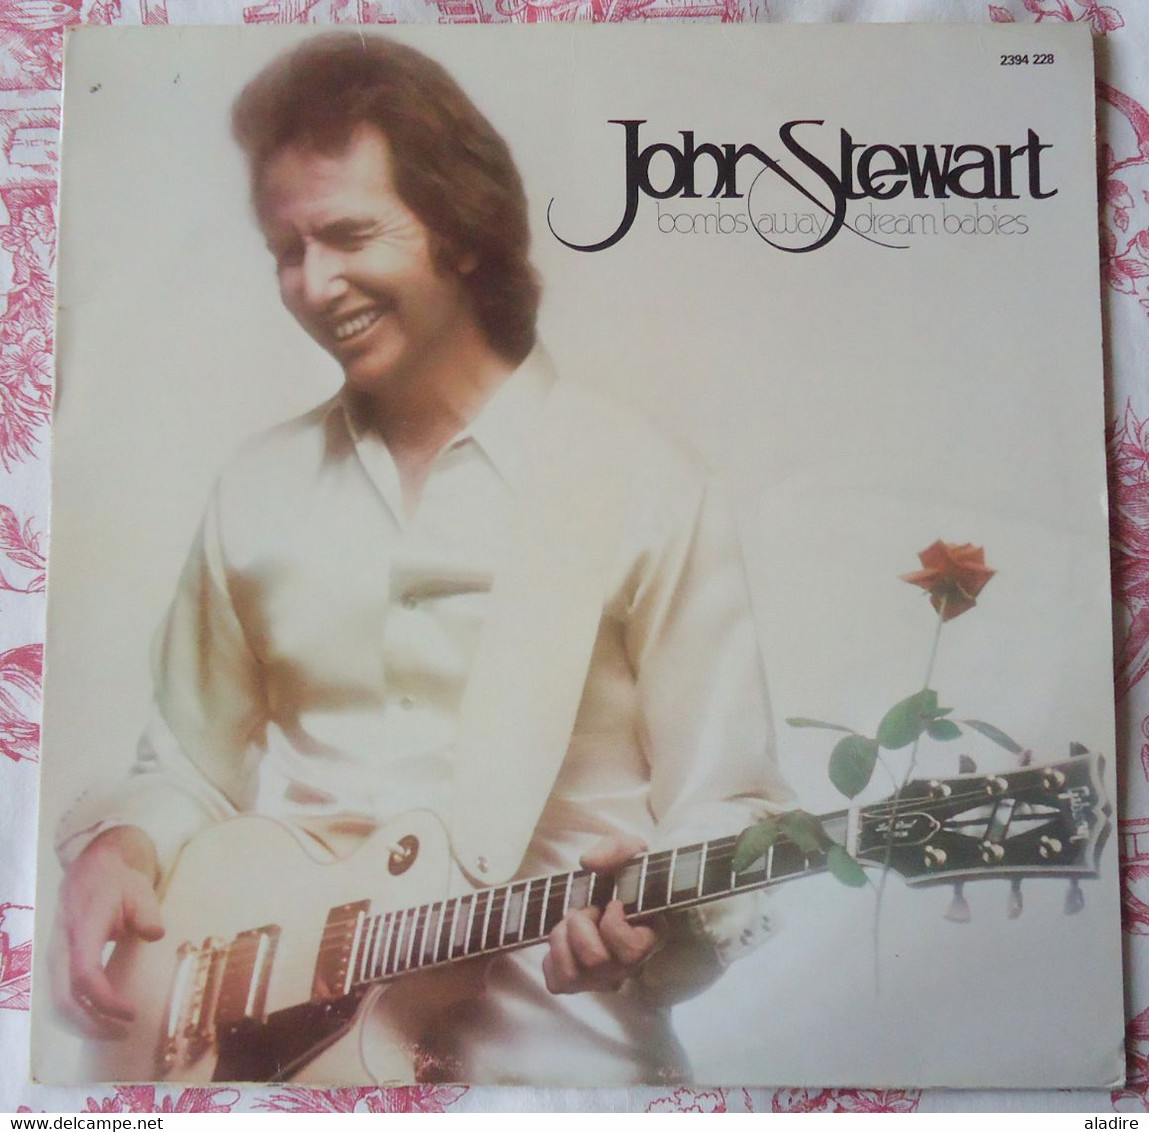 JOHN STEWART - Bombs Away Dream Babies - Warner Bros Records, 1979 - Country En Folk